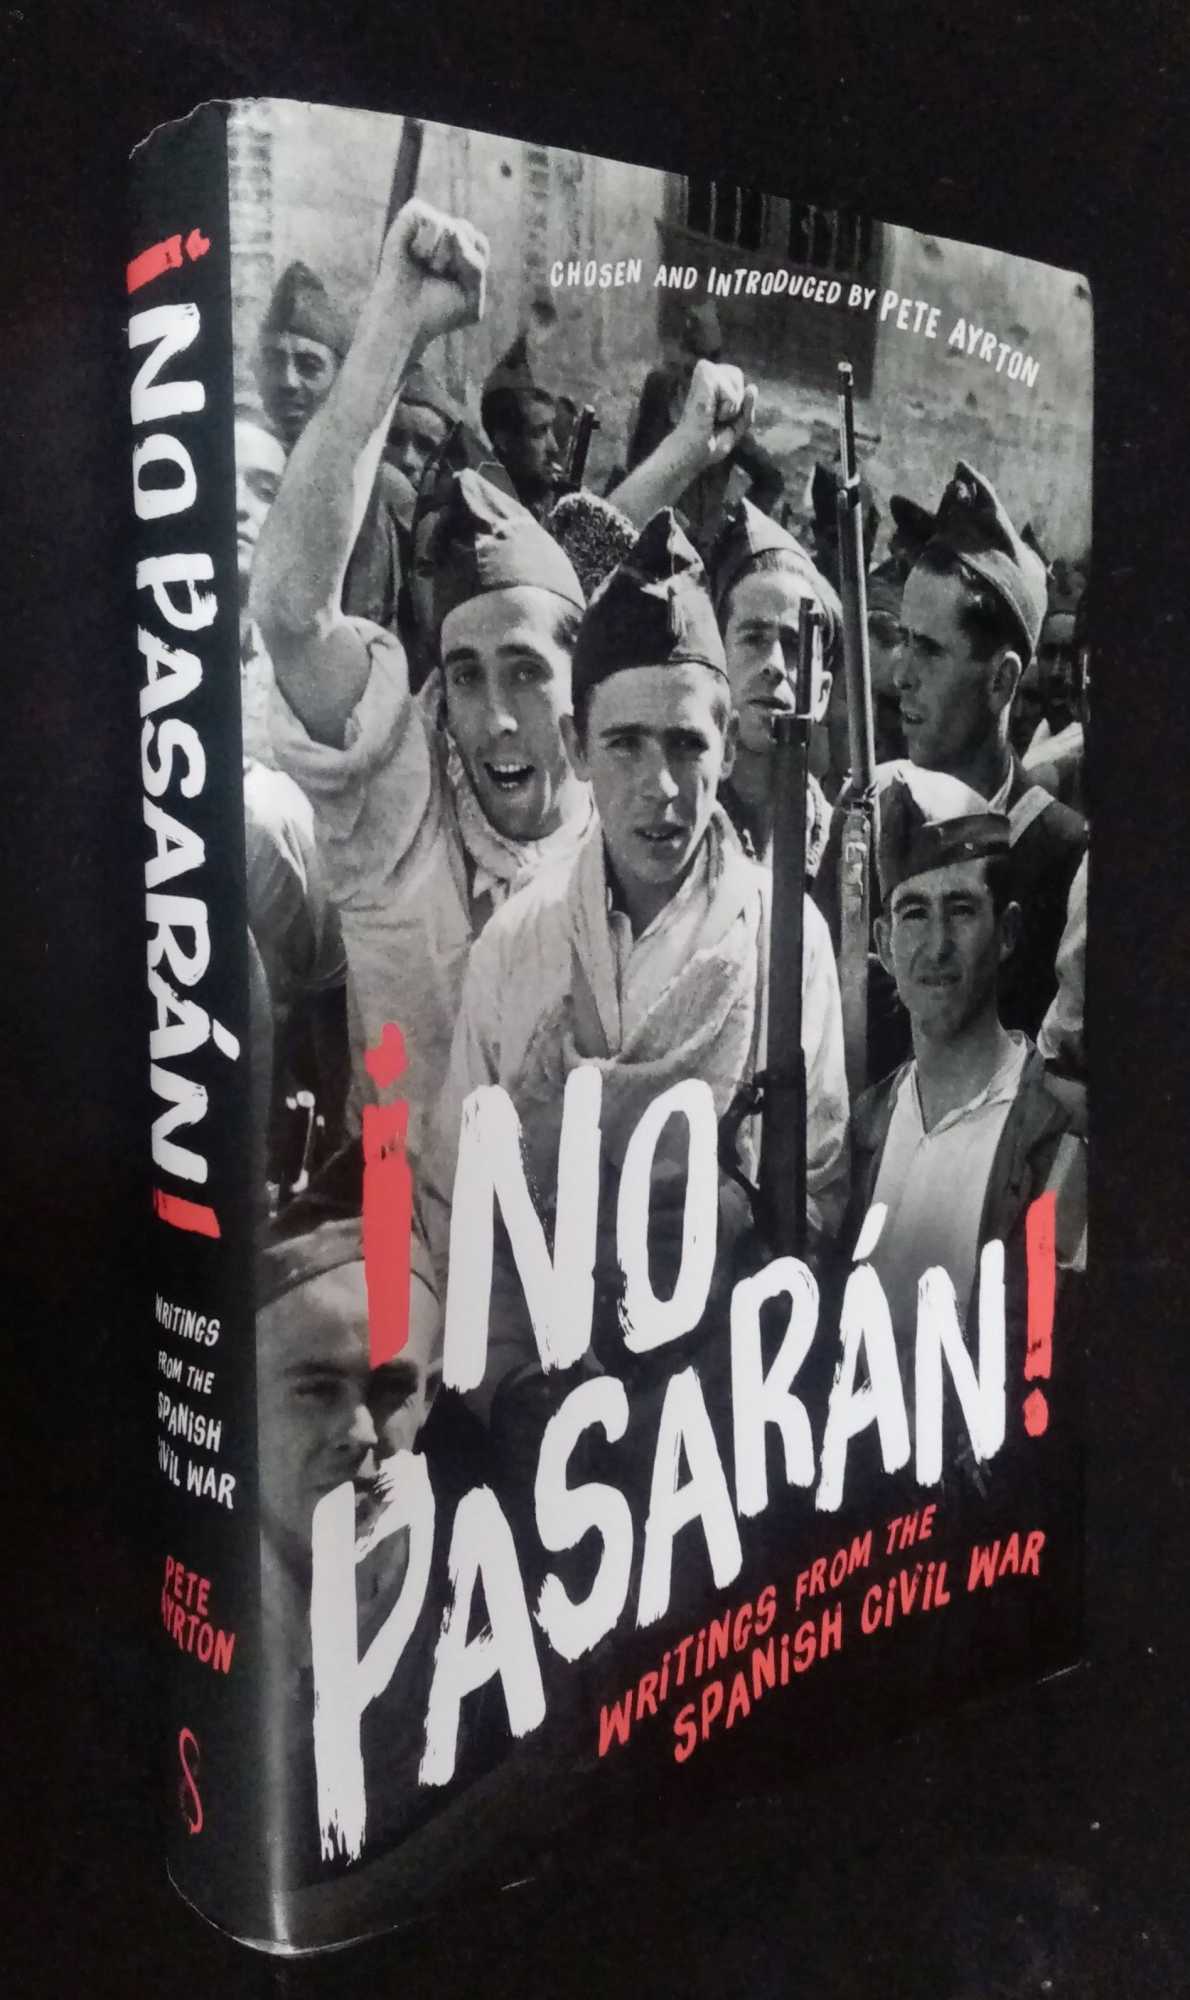 Pete Ayrton, ed. - No Pasaran!: Writings from the Spanish Civil War